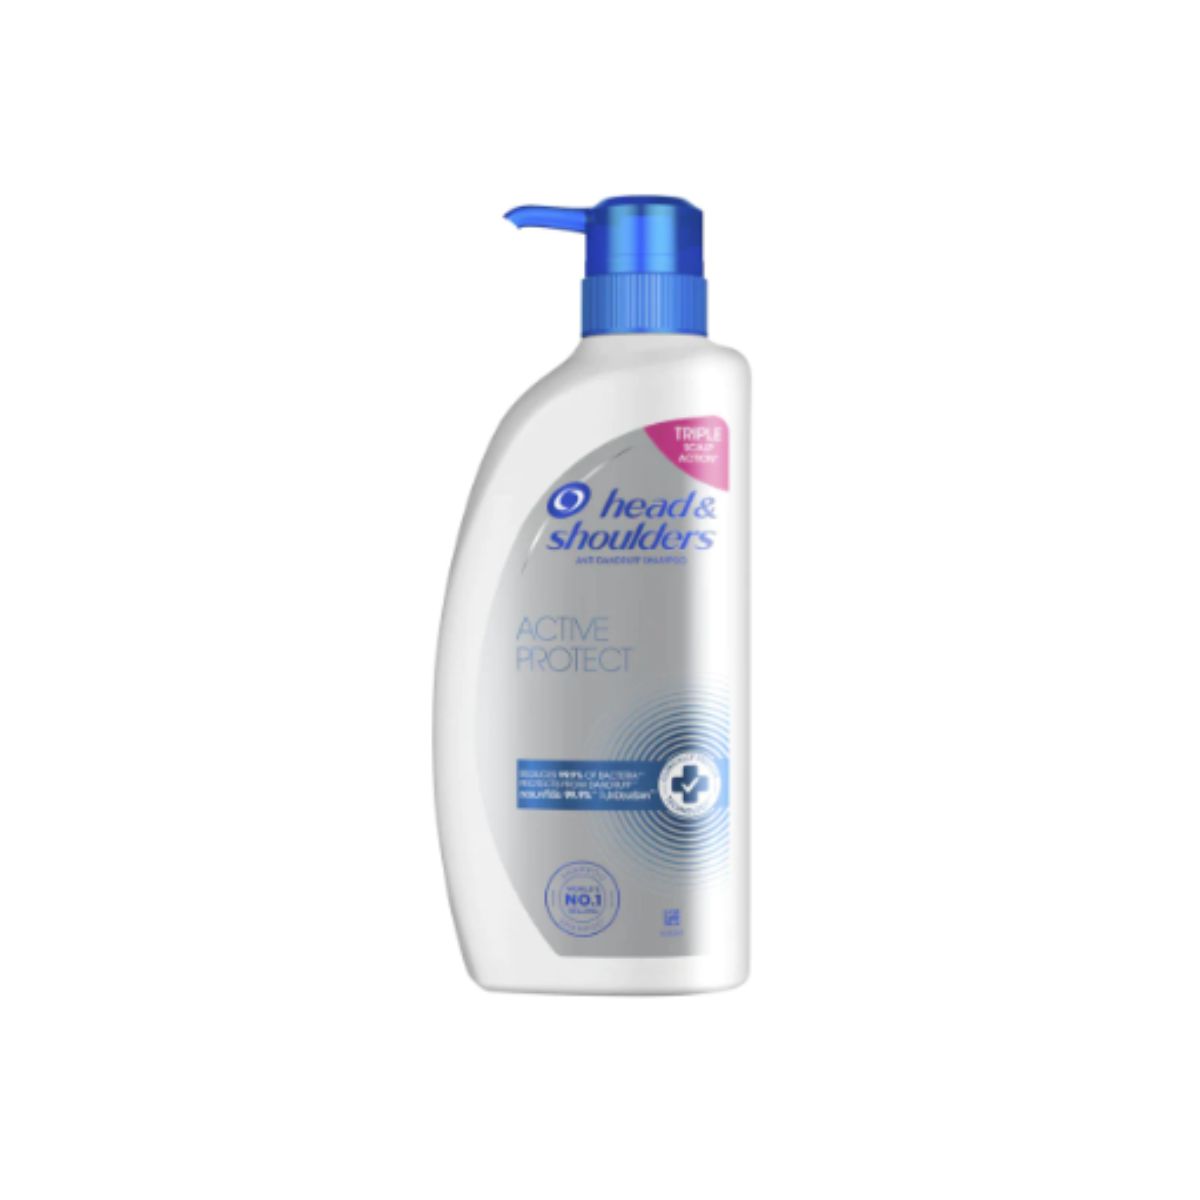 Head & Shoulder Anti Dandruff Shampoo - Active Protect - 410ml